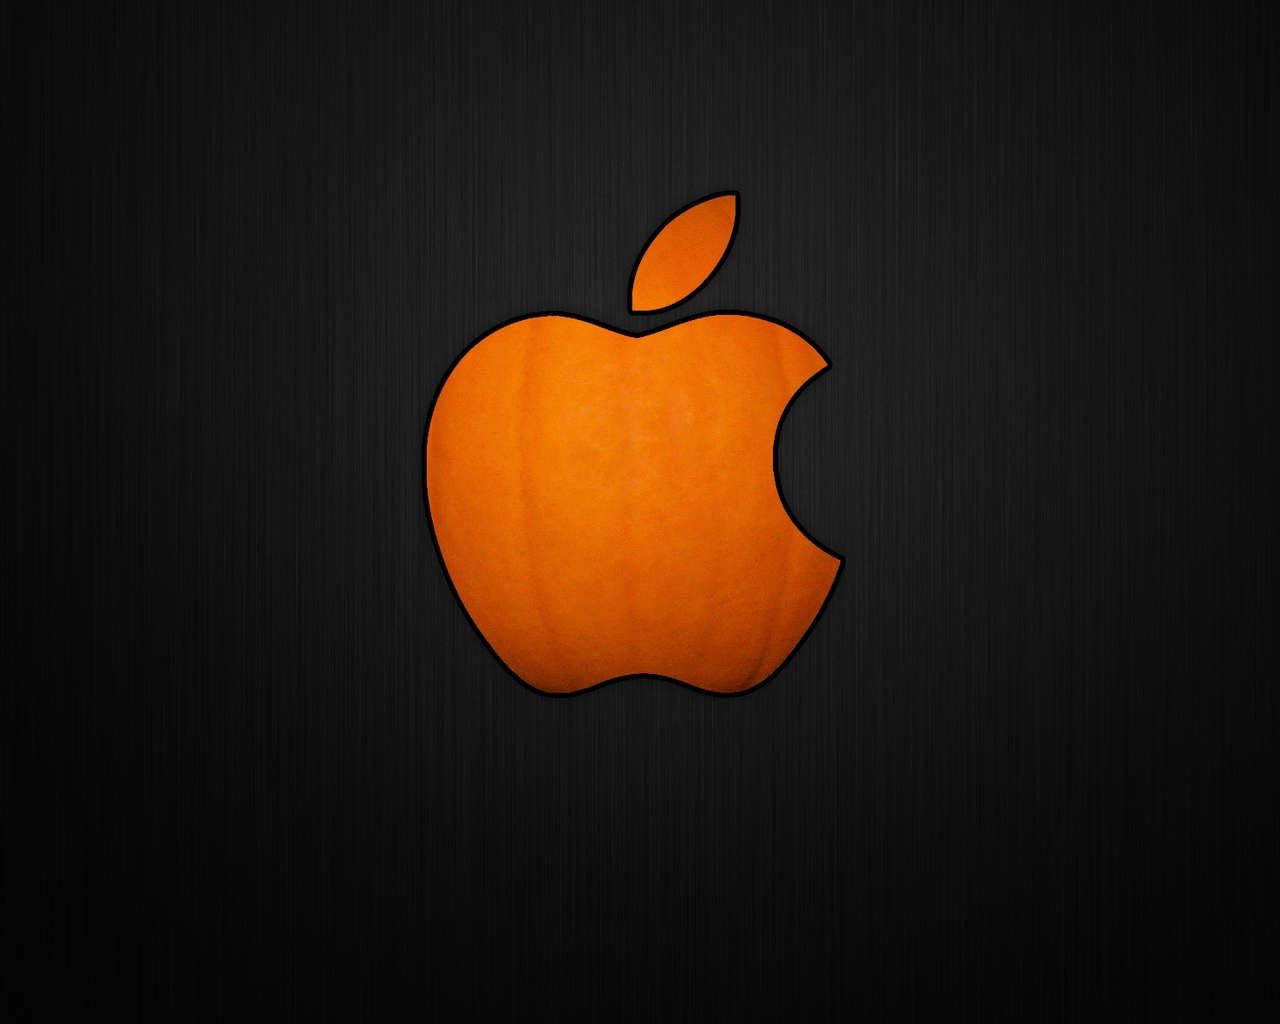 Cool Pumpkin Apple for 1280 x 1024 resolution